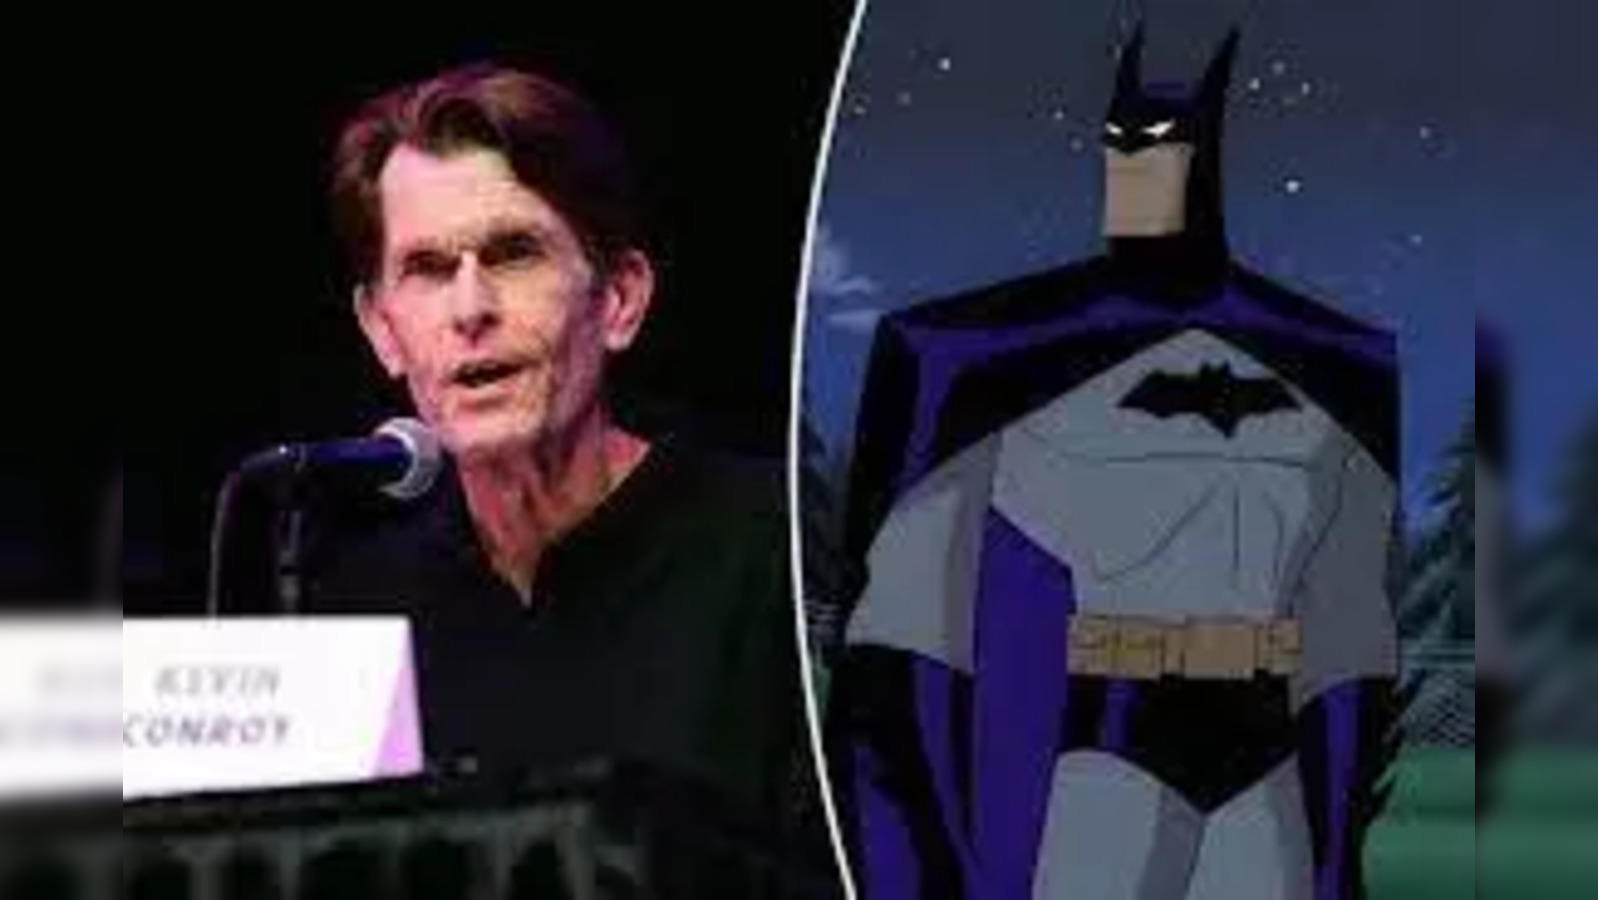 Batman voice actor Kevin Conroy dies aged 66, US news